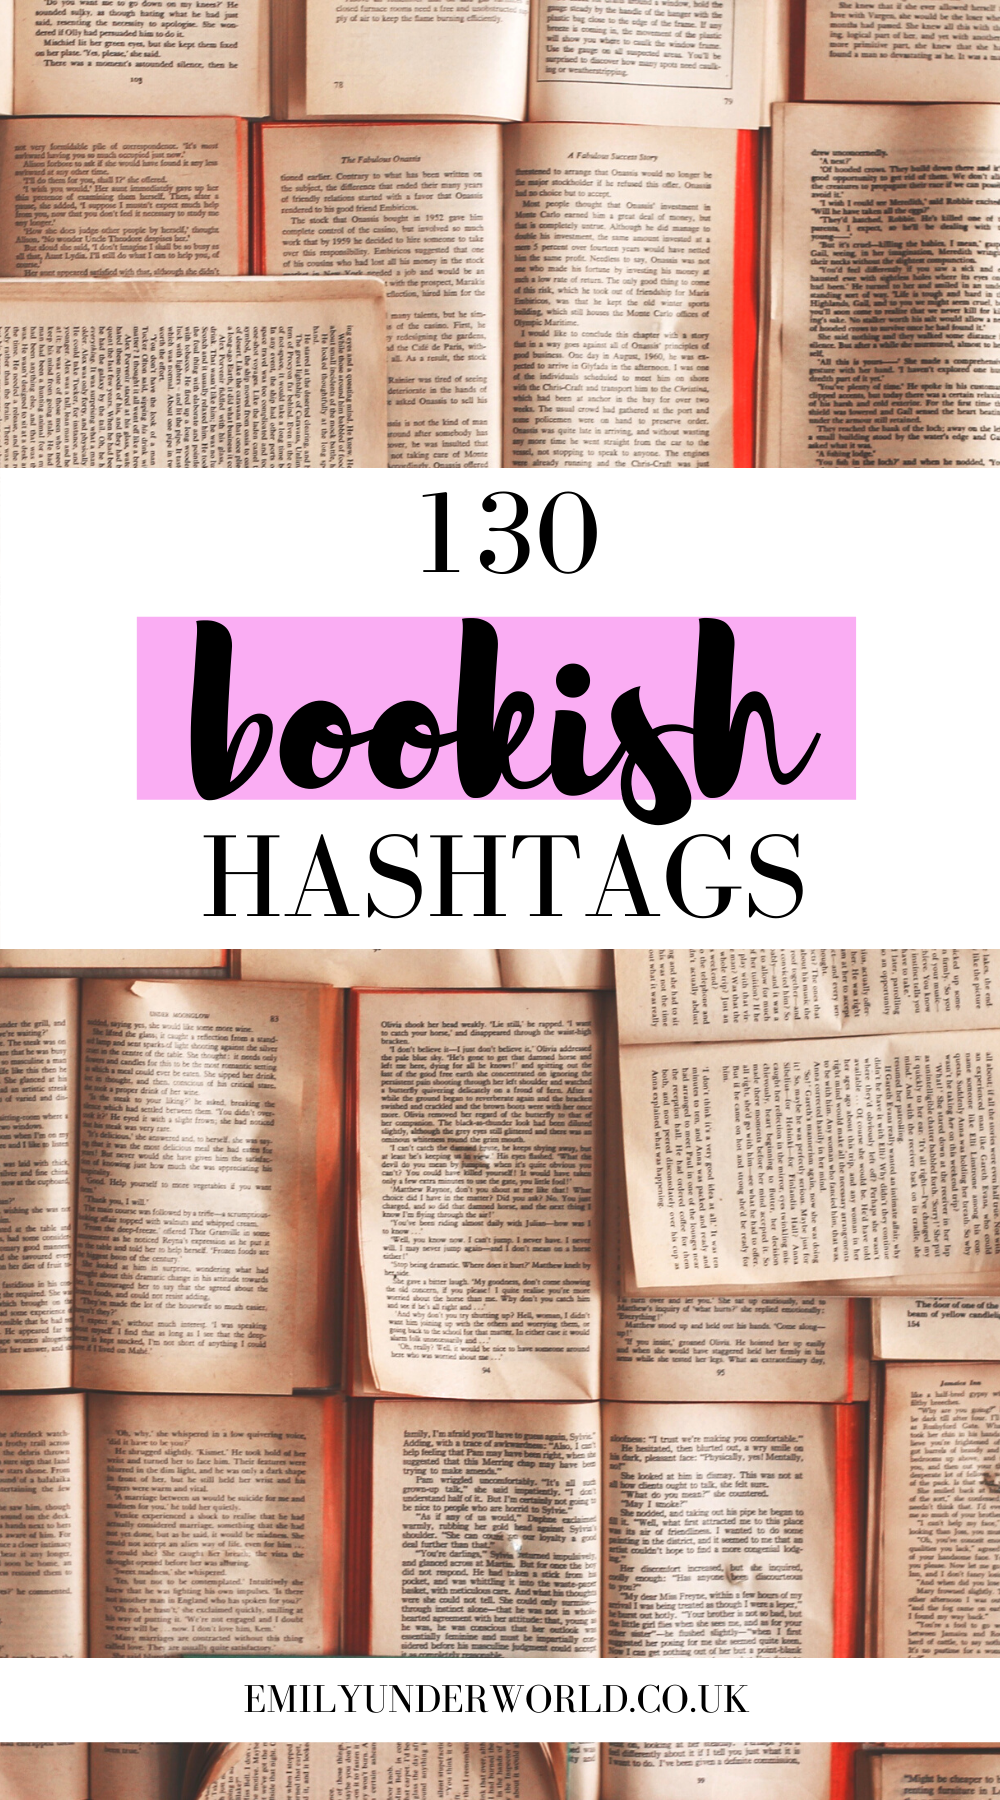 130 Bookish Hashtags